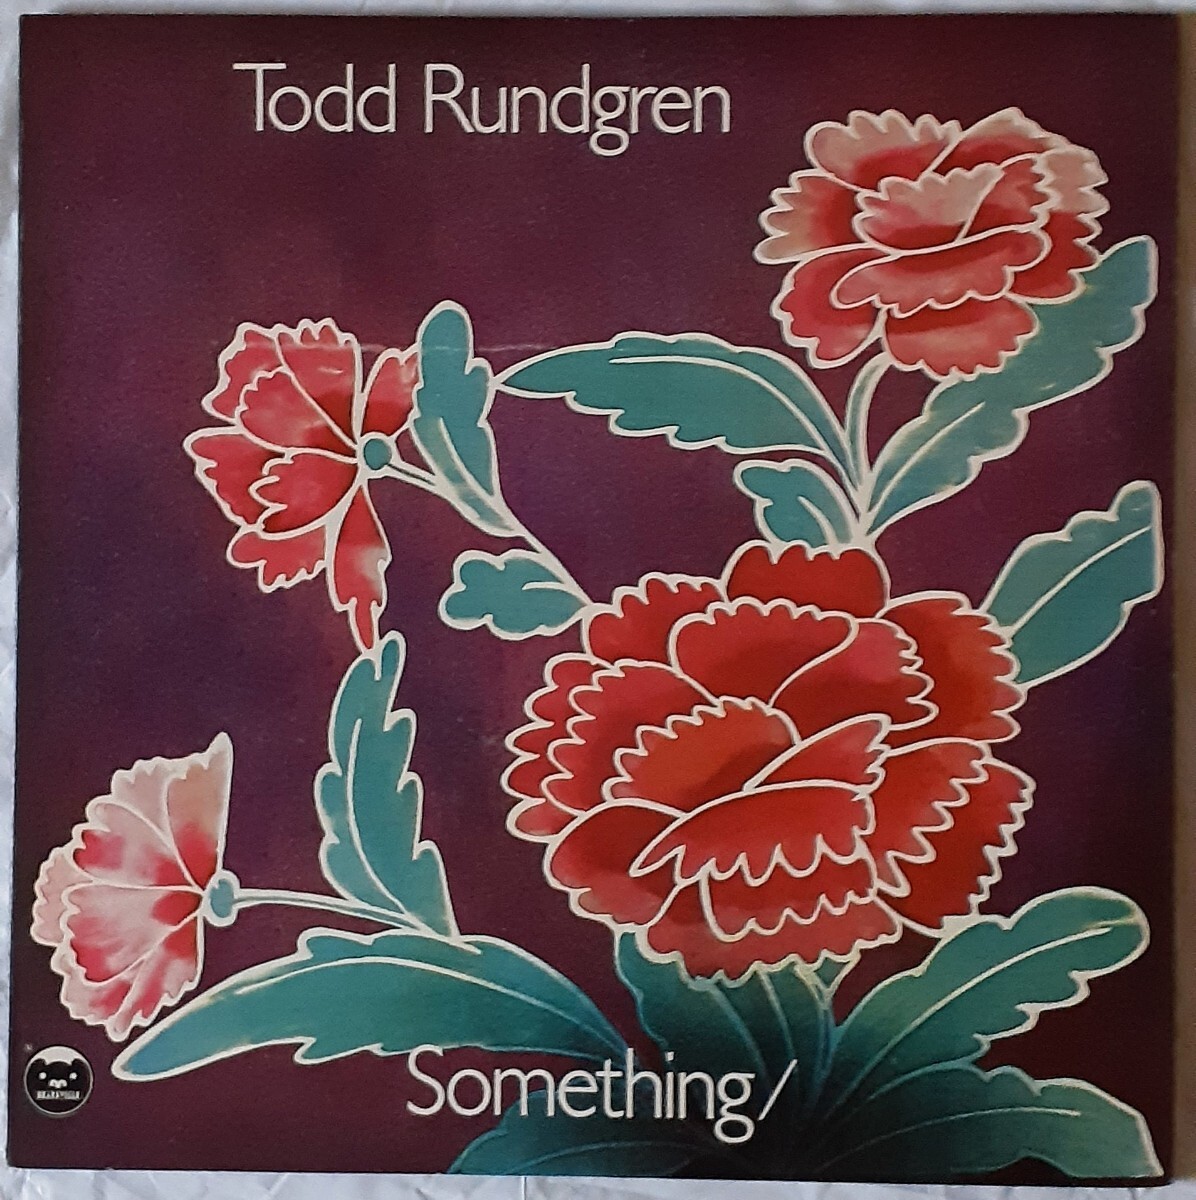 Todd Rundgren 【LPレコード】 Something / Anything? 見開きジャケット2枚組 1972年 米Bearsville盤 (再発の米Rhino盤ではありません)の画像1